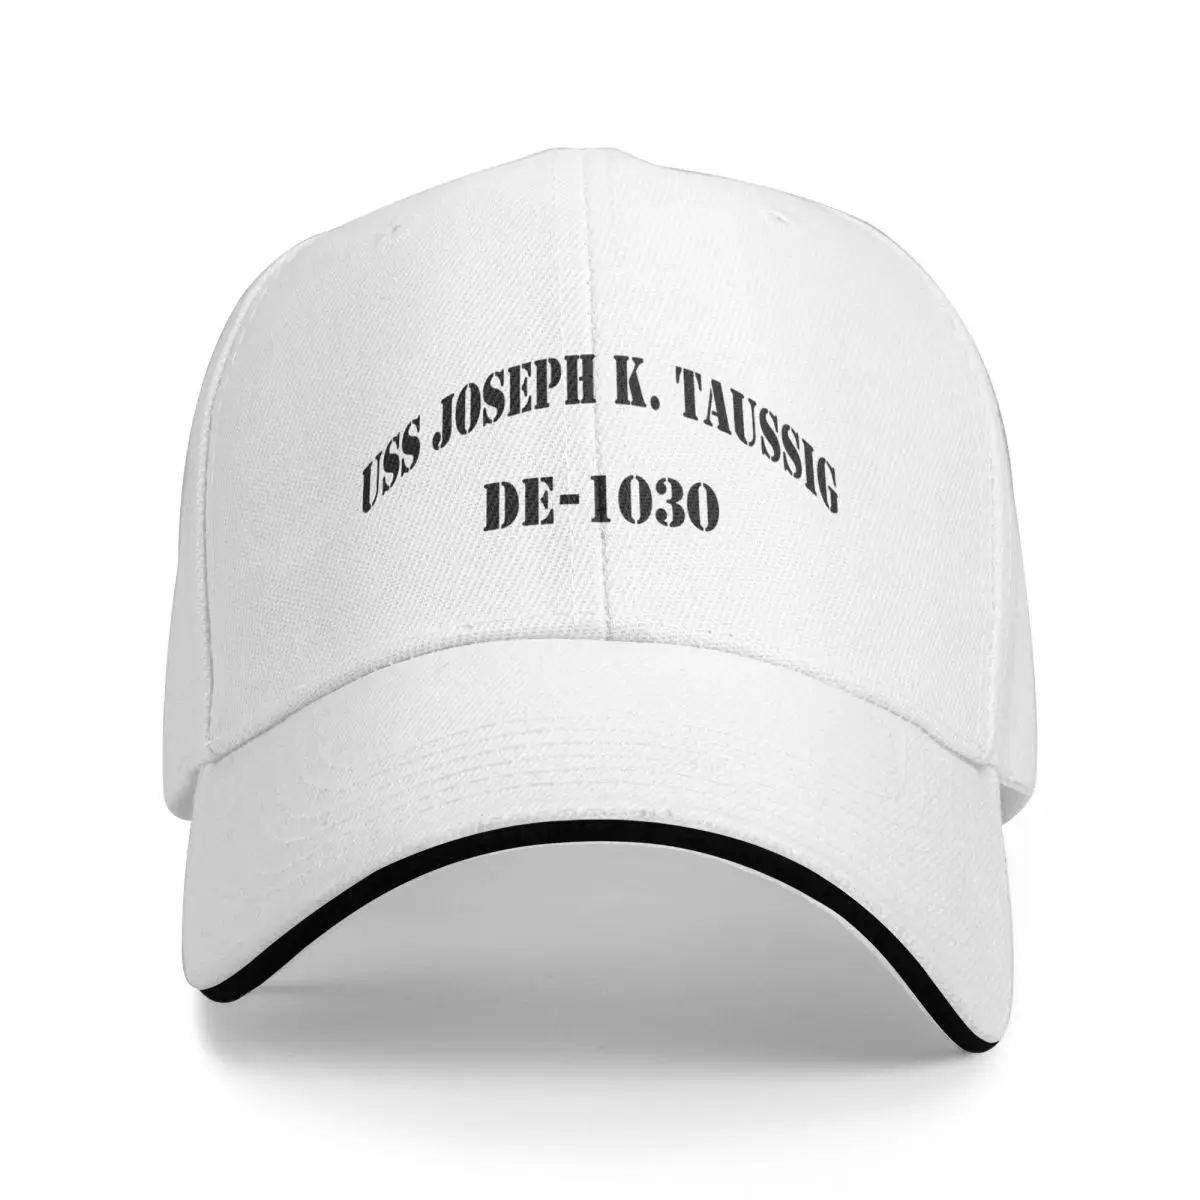 USS JOSEPH K. Бейсбольная кепка TAUSSIG (DE-1030) SHIP'S STORE, походная кепка на заказ |-F-| Мужская кепка Женская